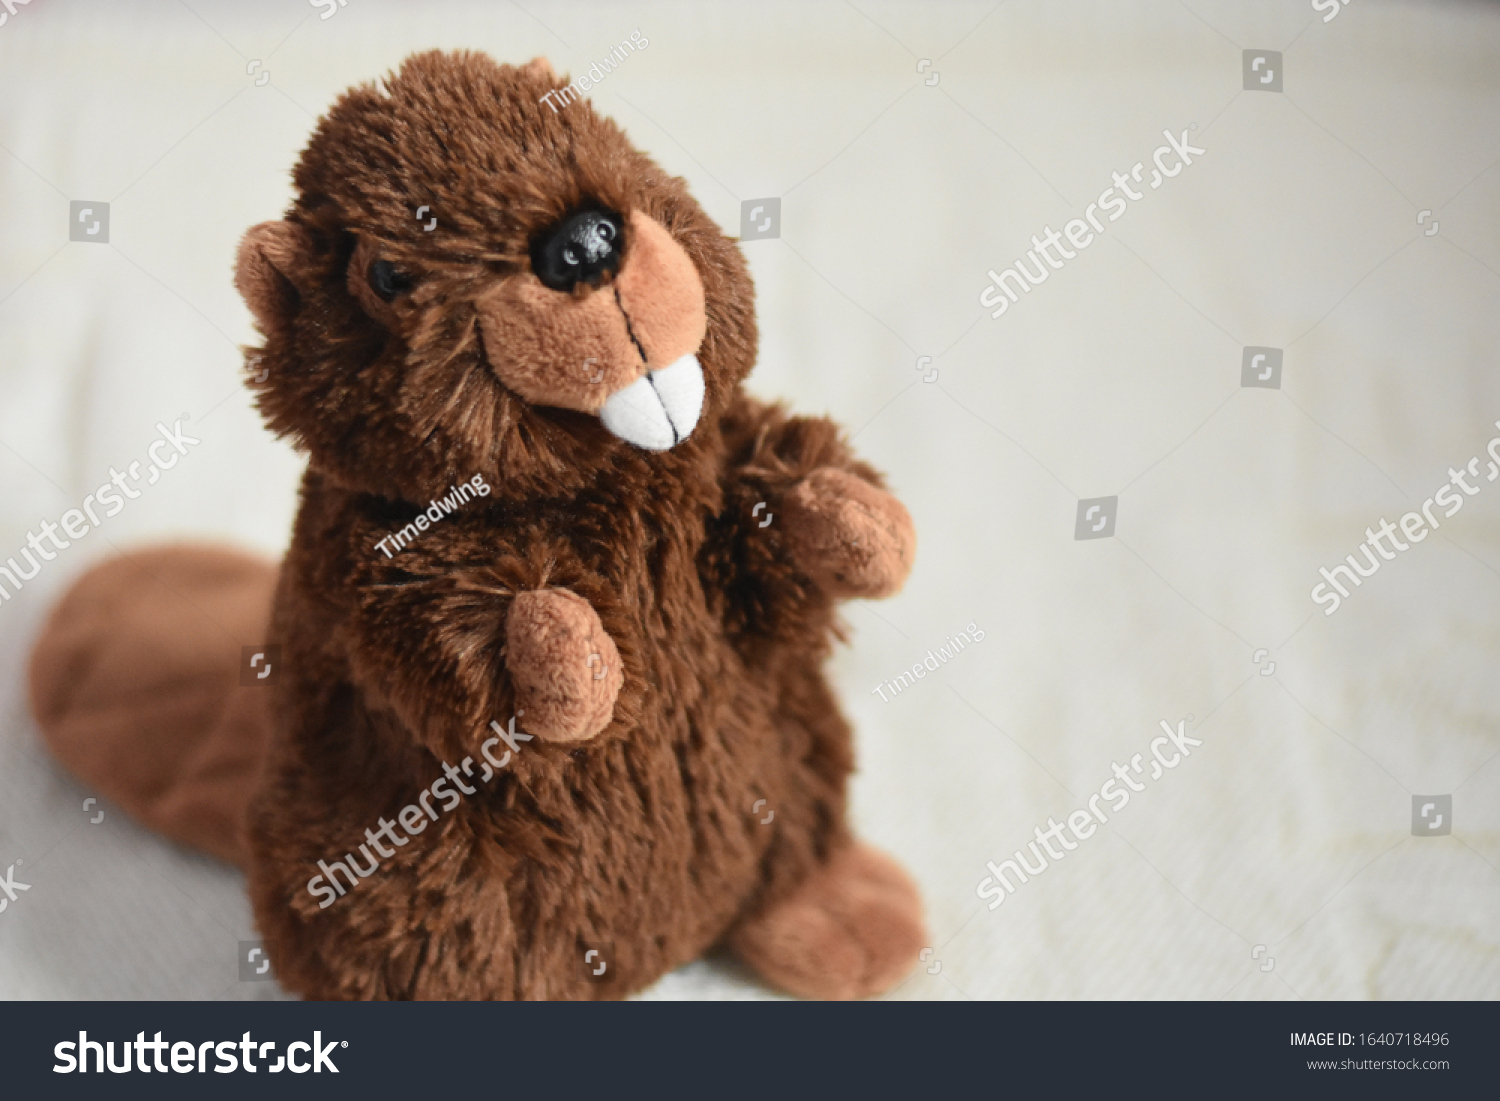 beaver teddy